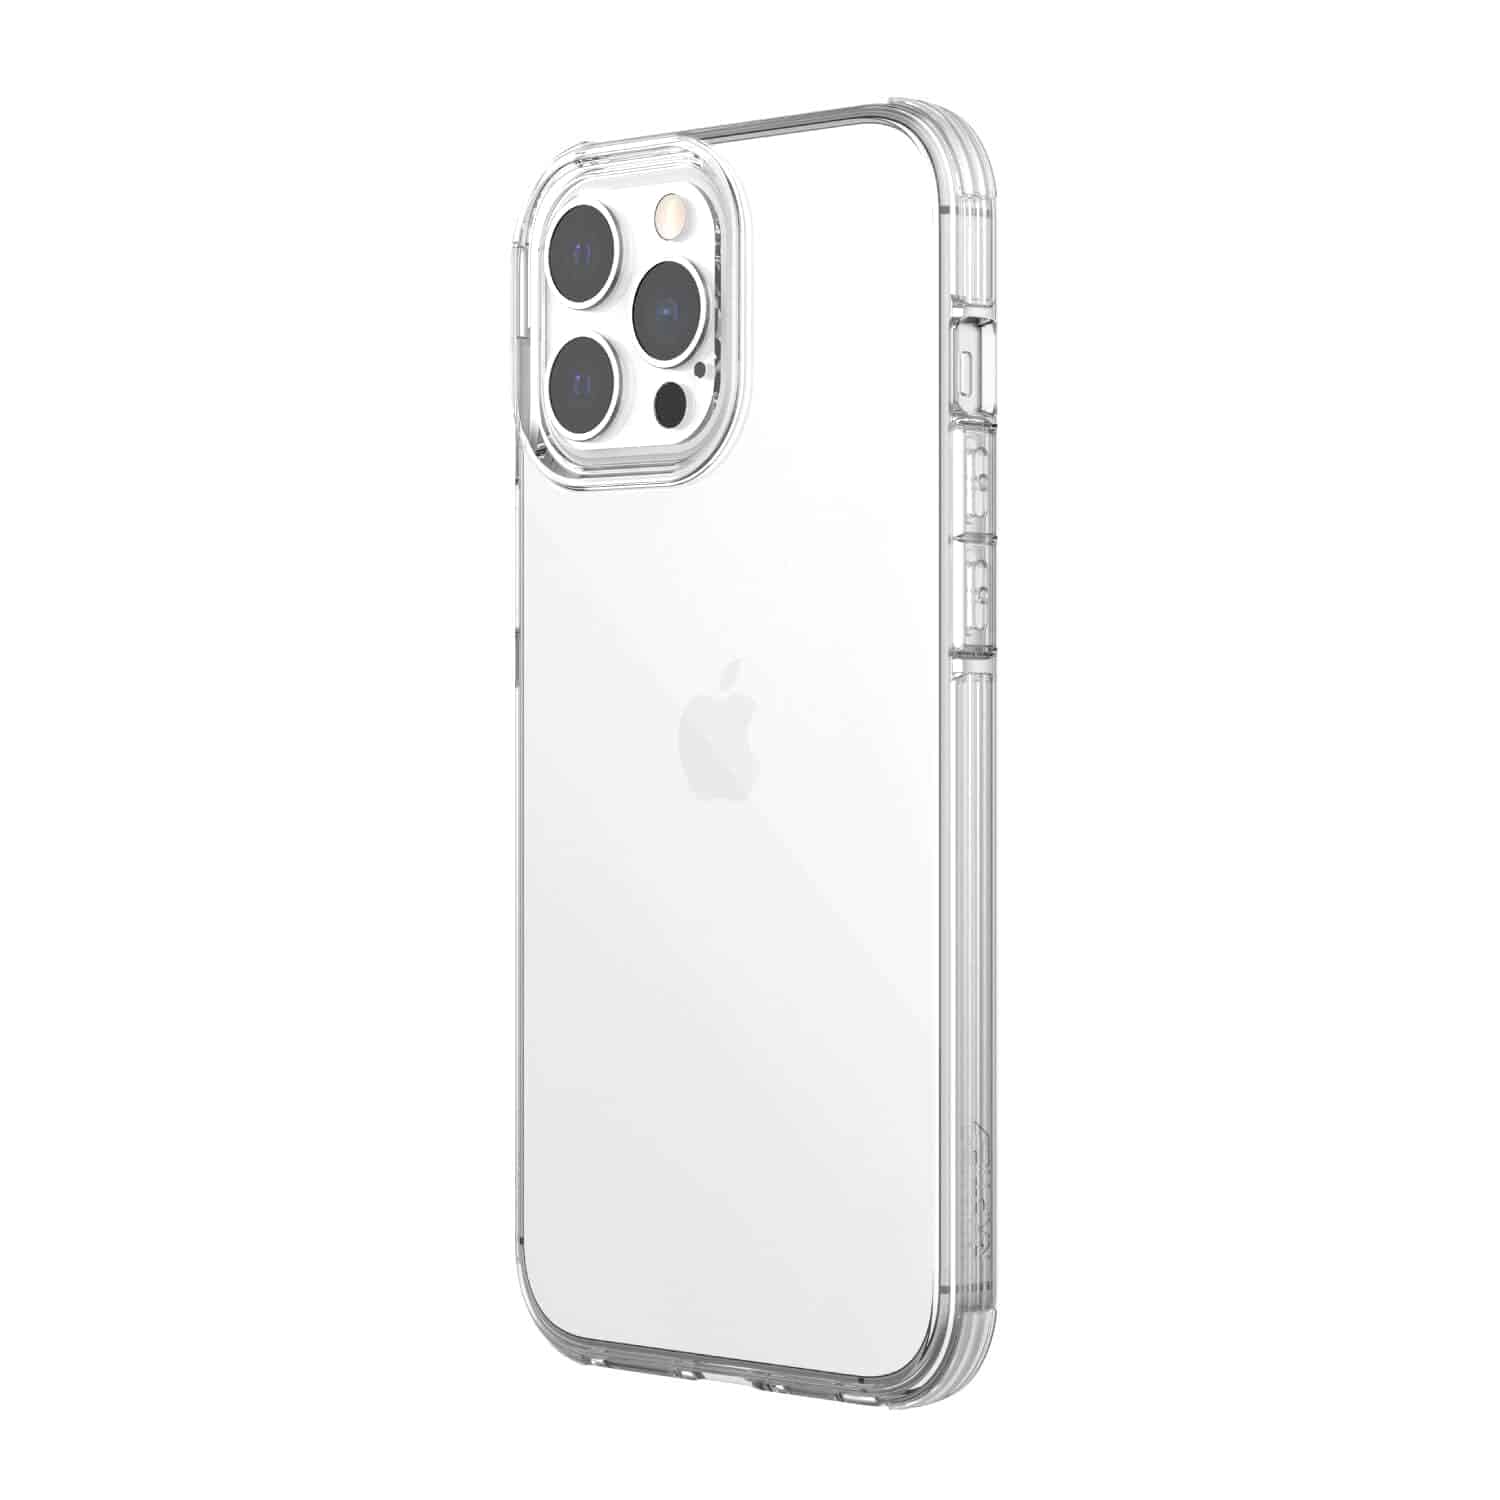 کاور رپتیک مدل Clear مناسب برای گوشی موبایل اپل iPhone 13 Pro Max